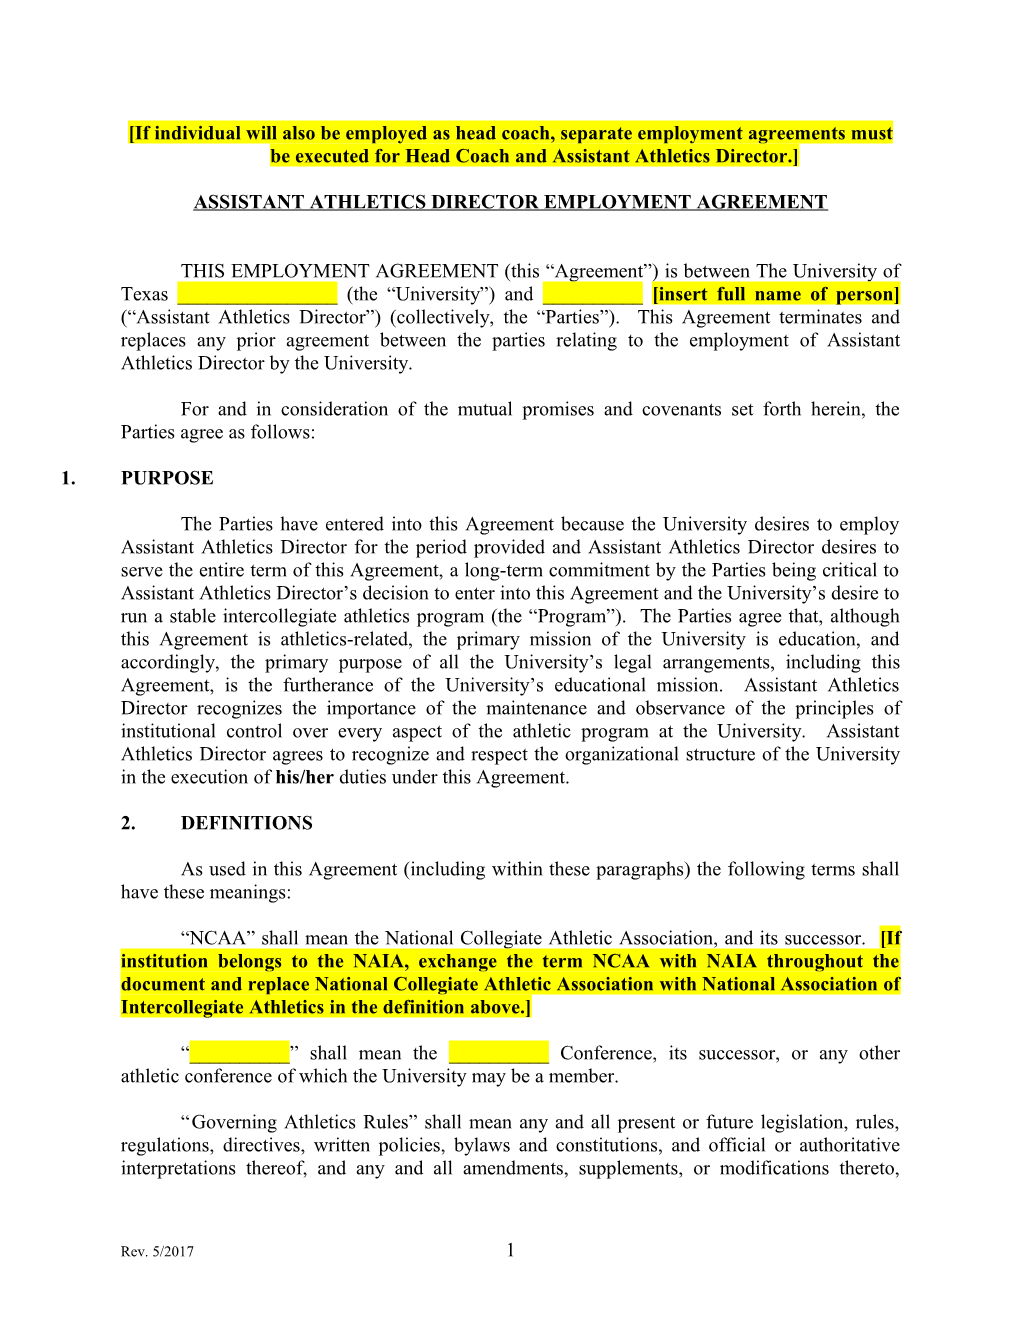 Assistant Athletics Director Employment Agreement